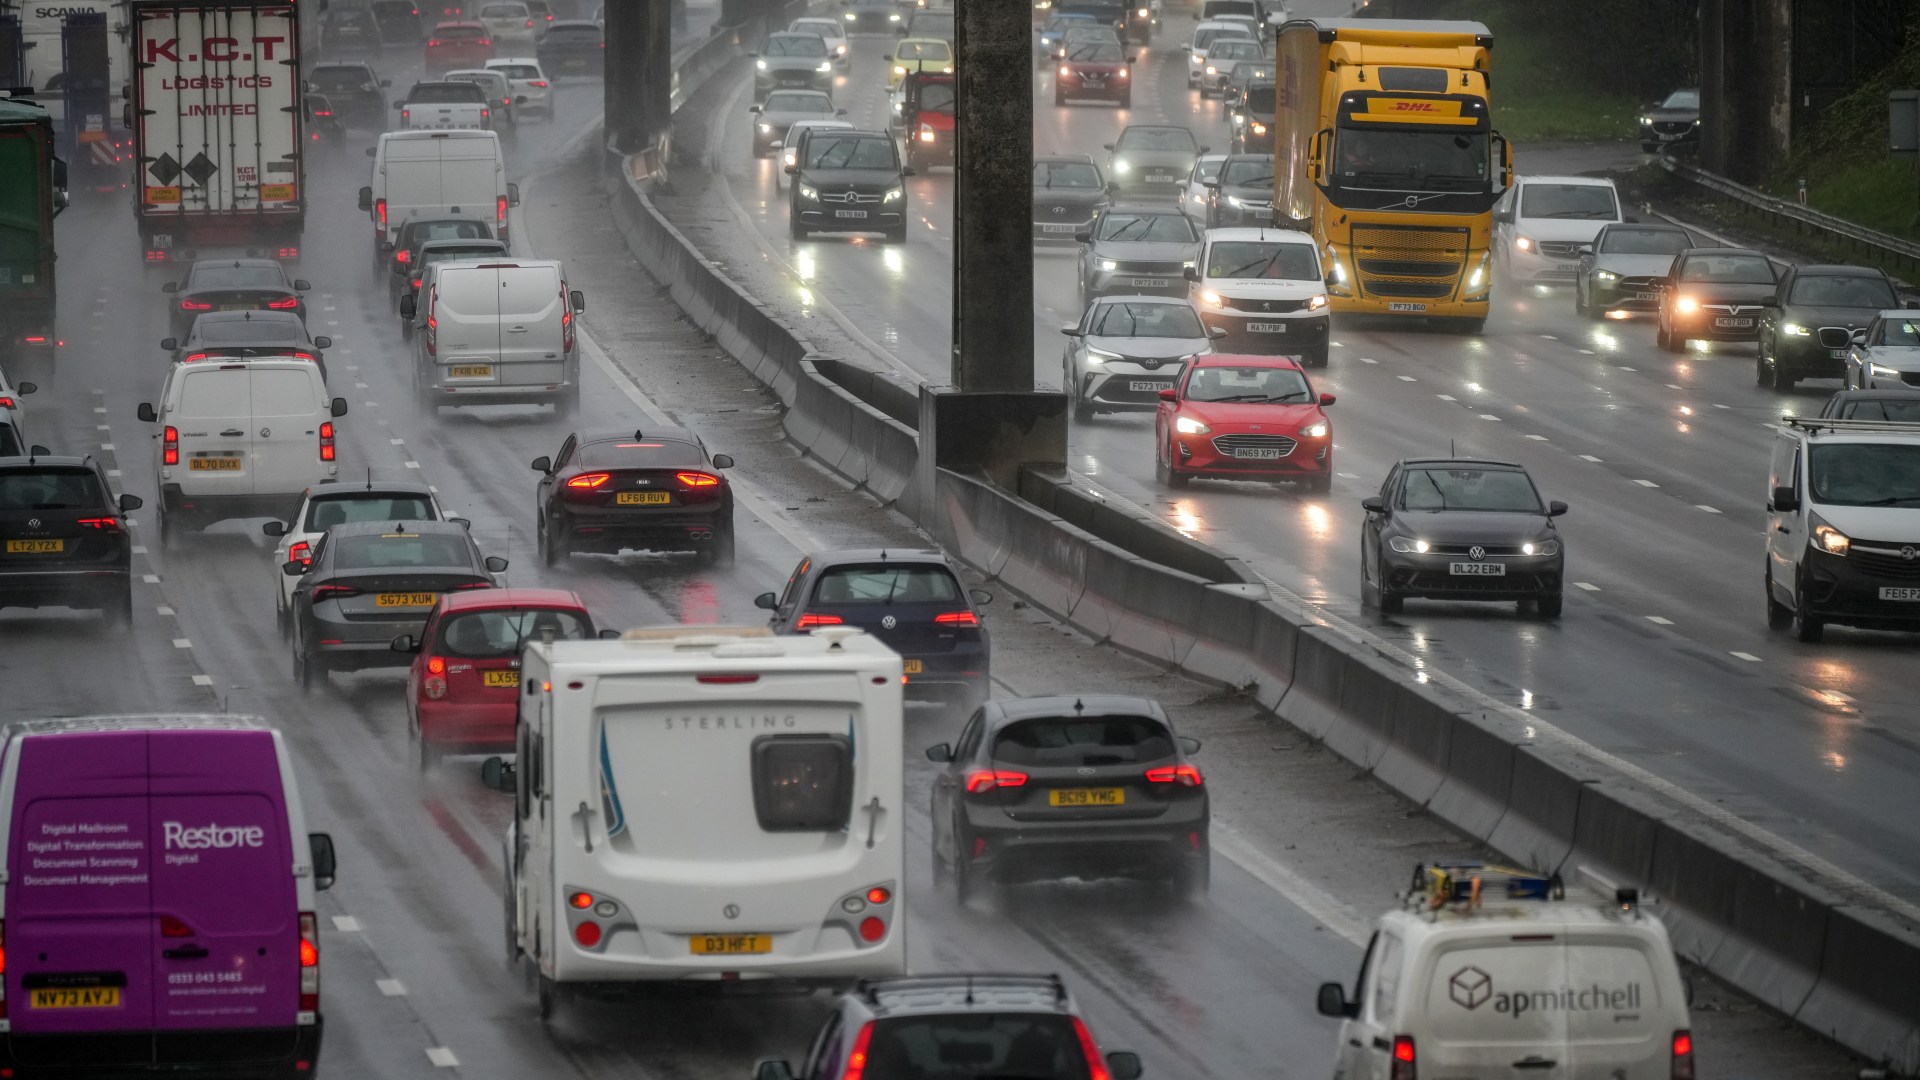 Bank Holiday chaos: 16 million drivers hit road as Brits scramble to escape rail strikes